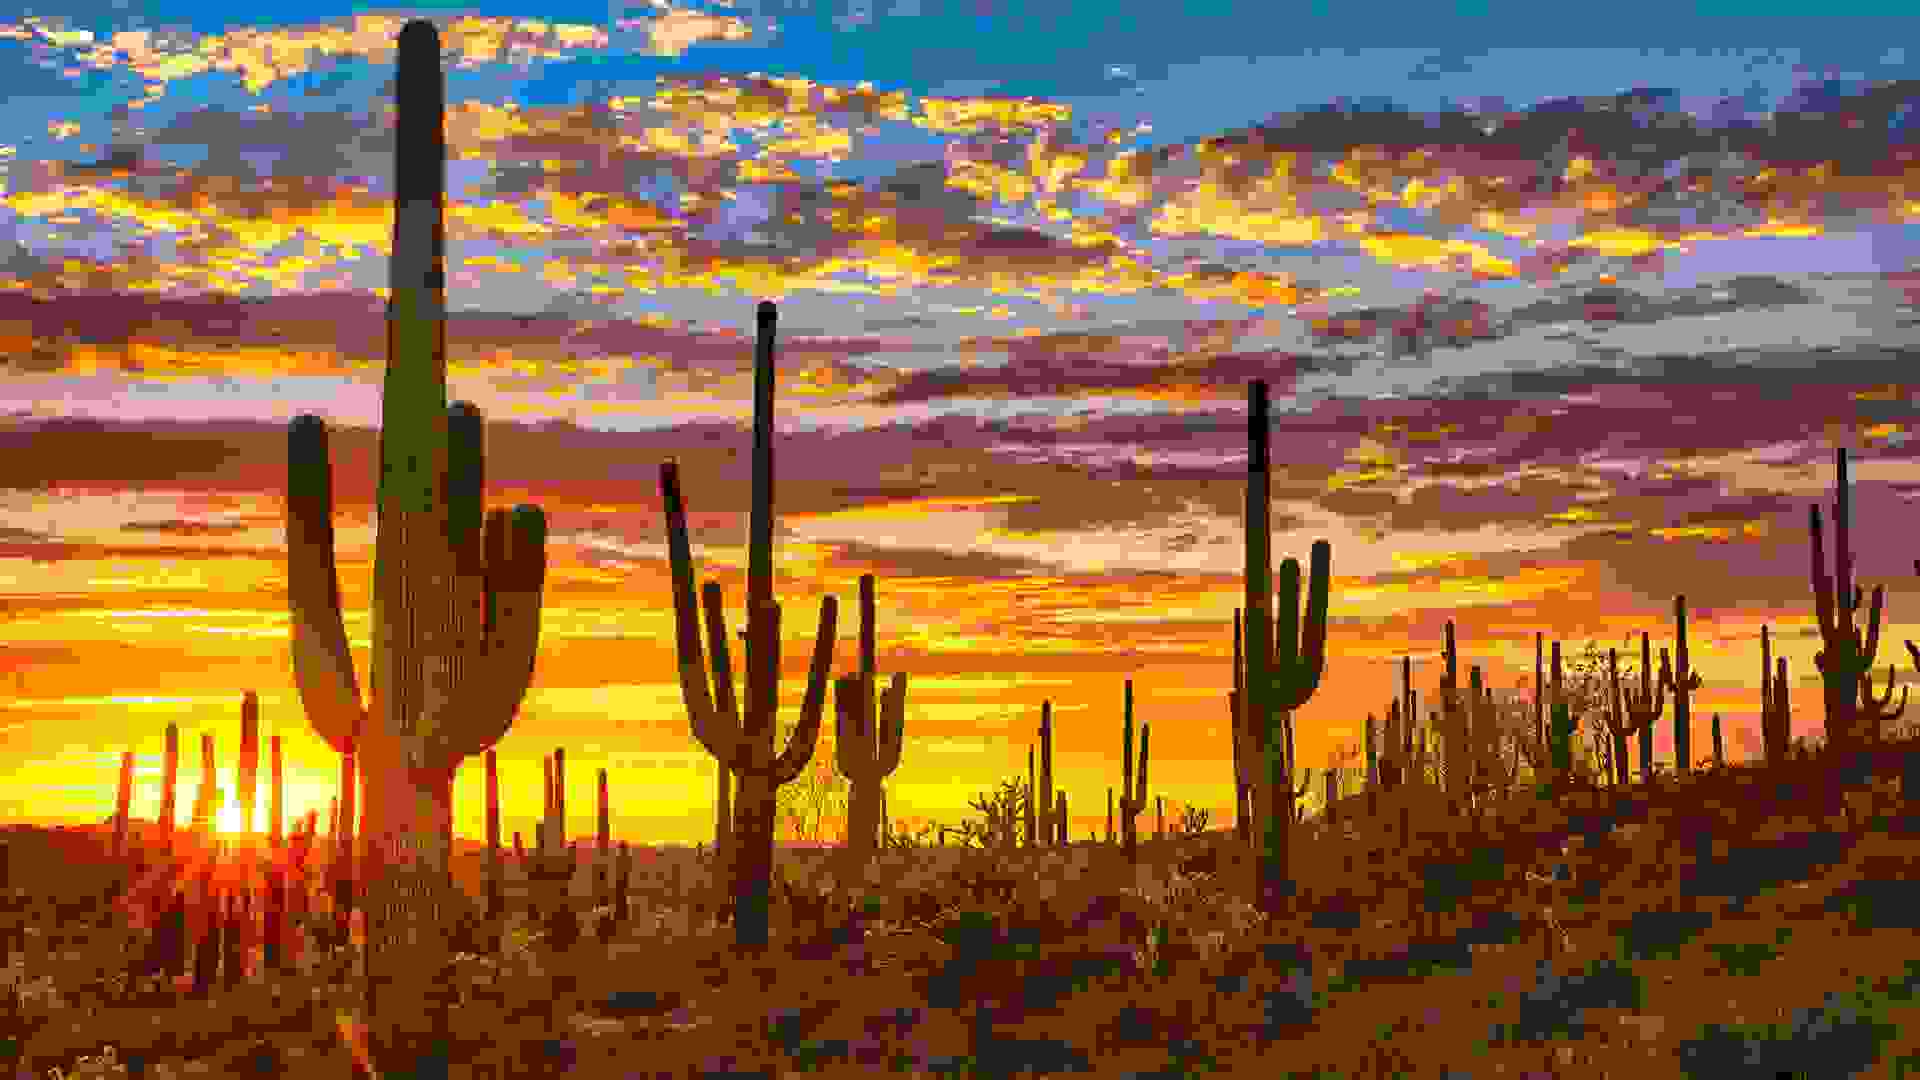 Sunset in Sonoran Desert near Phoenix Arizona